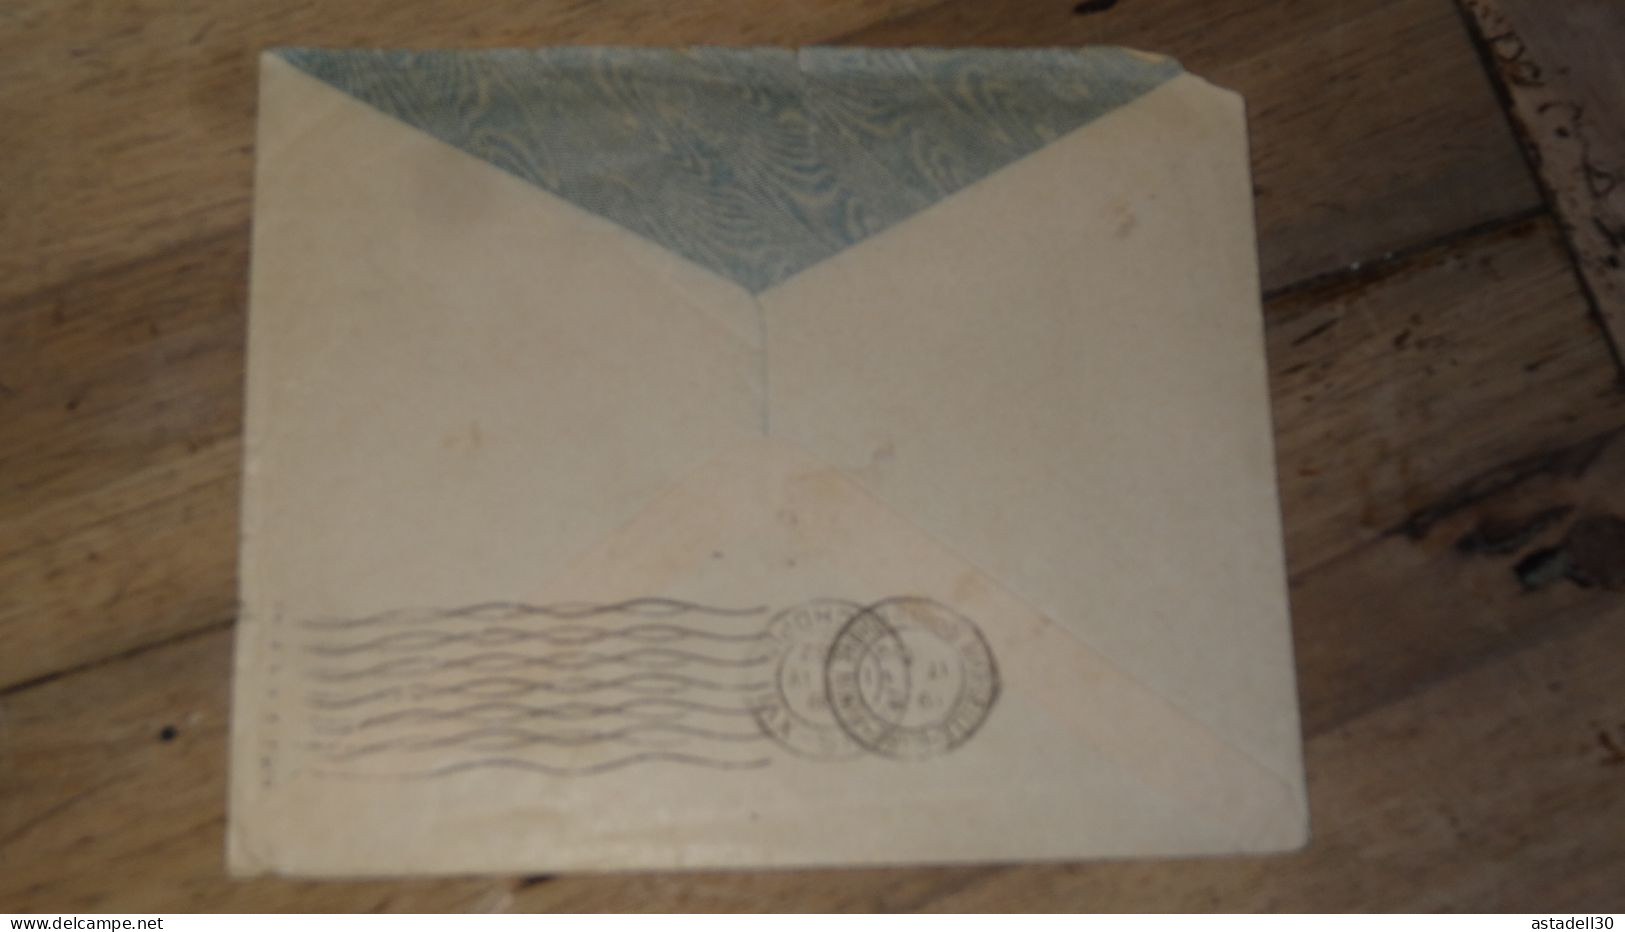 Enveloppe Indochine, Avion, 1932   ......... Boite1 ...... 240424-62 - Cartas & Documentos